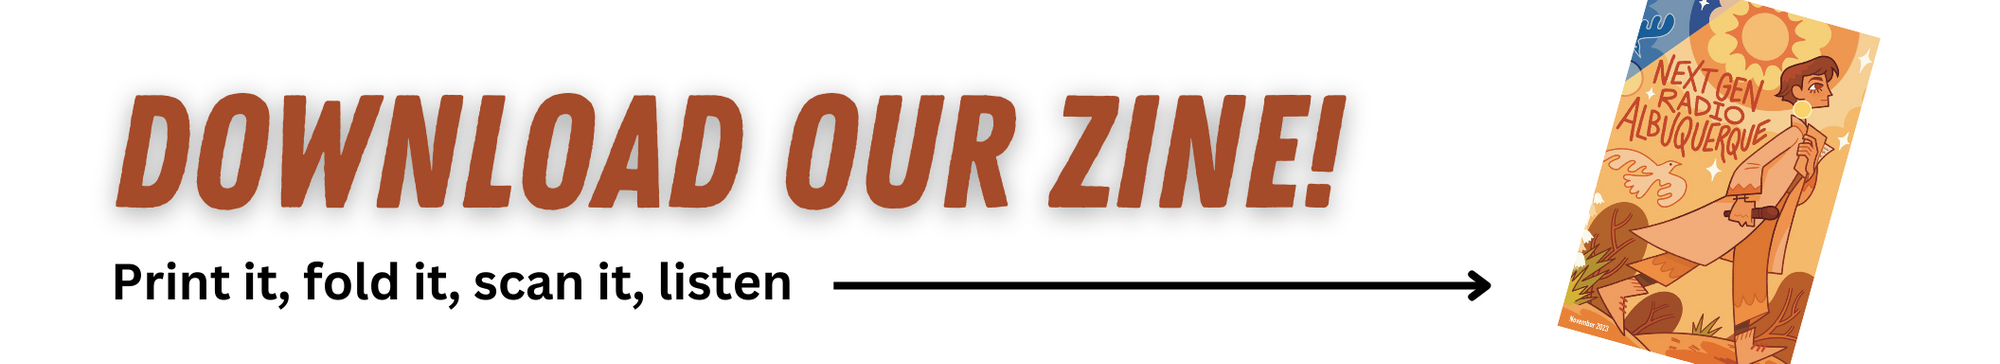 Download our zine